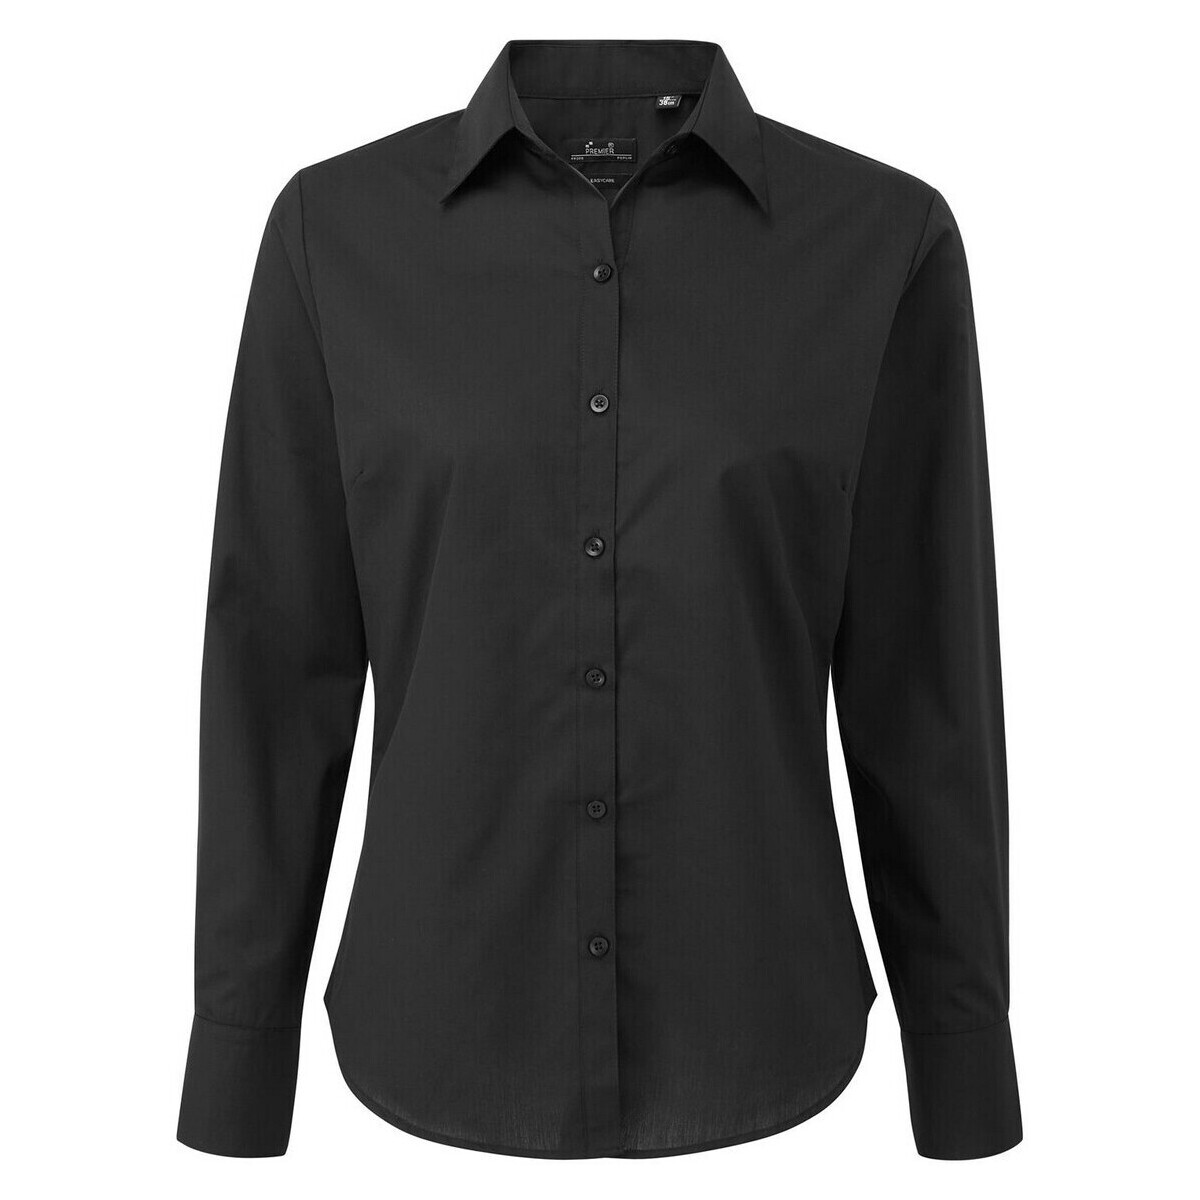 textil Mujer Camisas Premier PR300 Negro